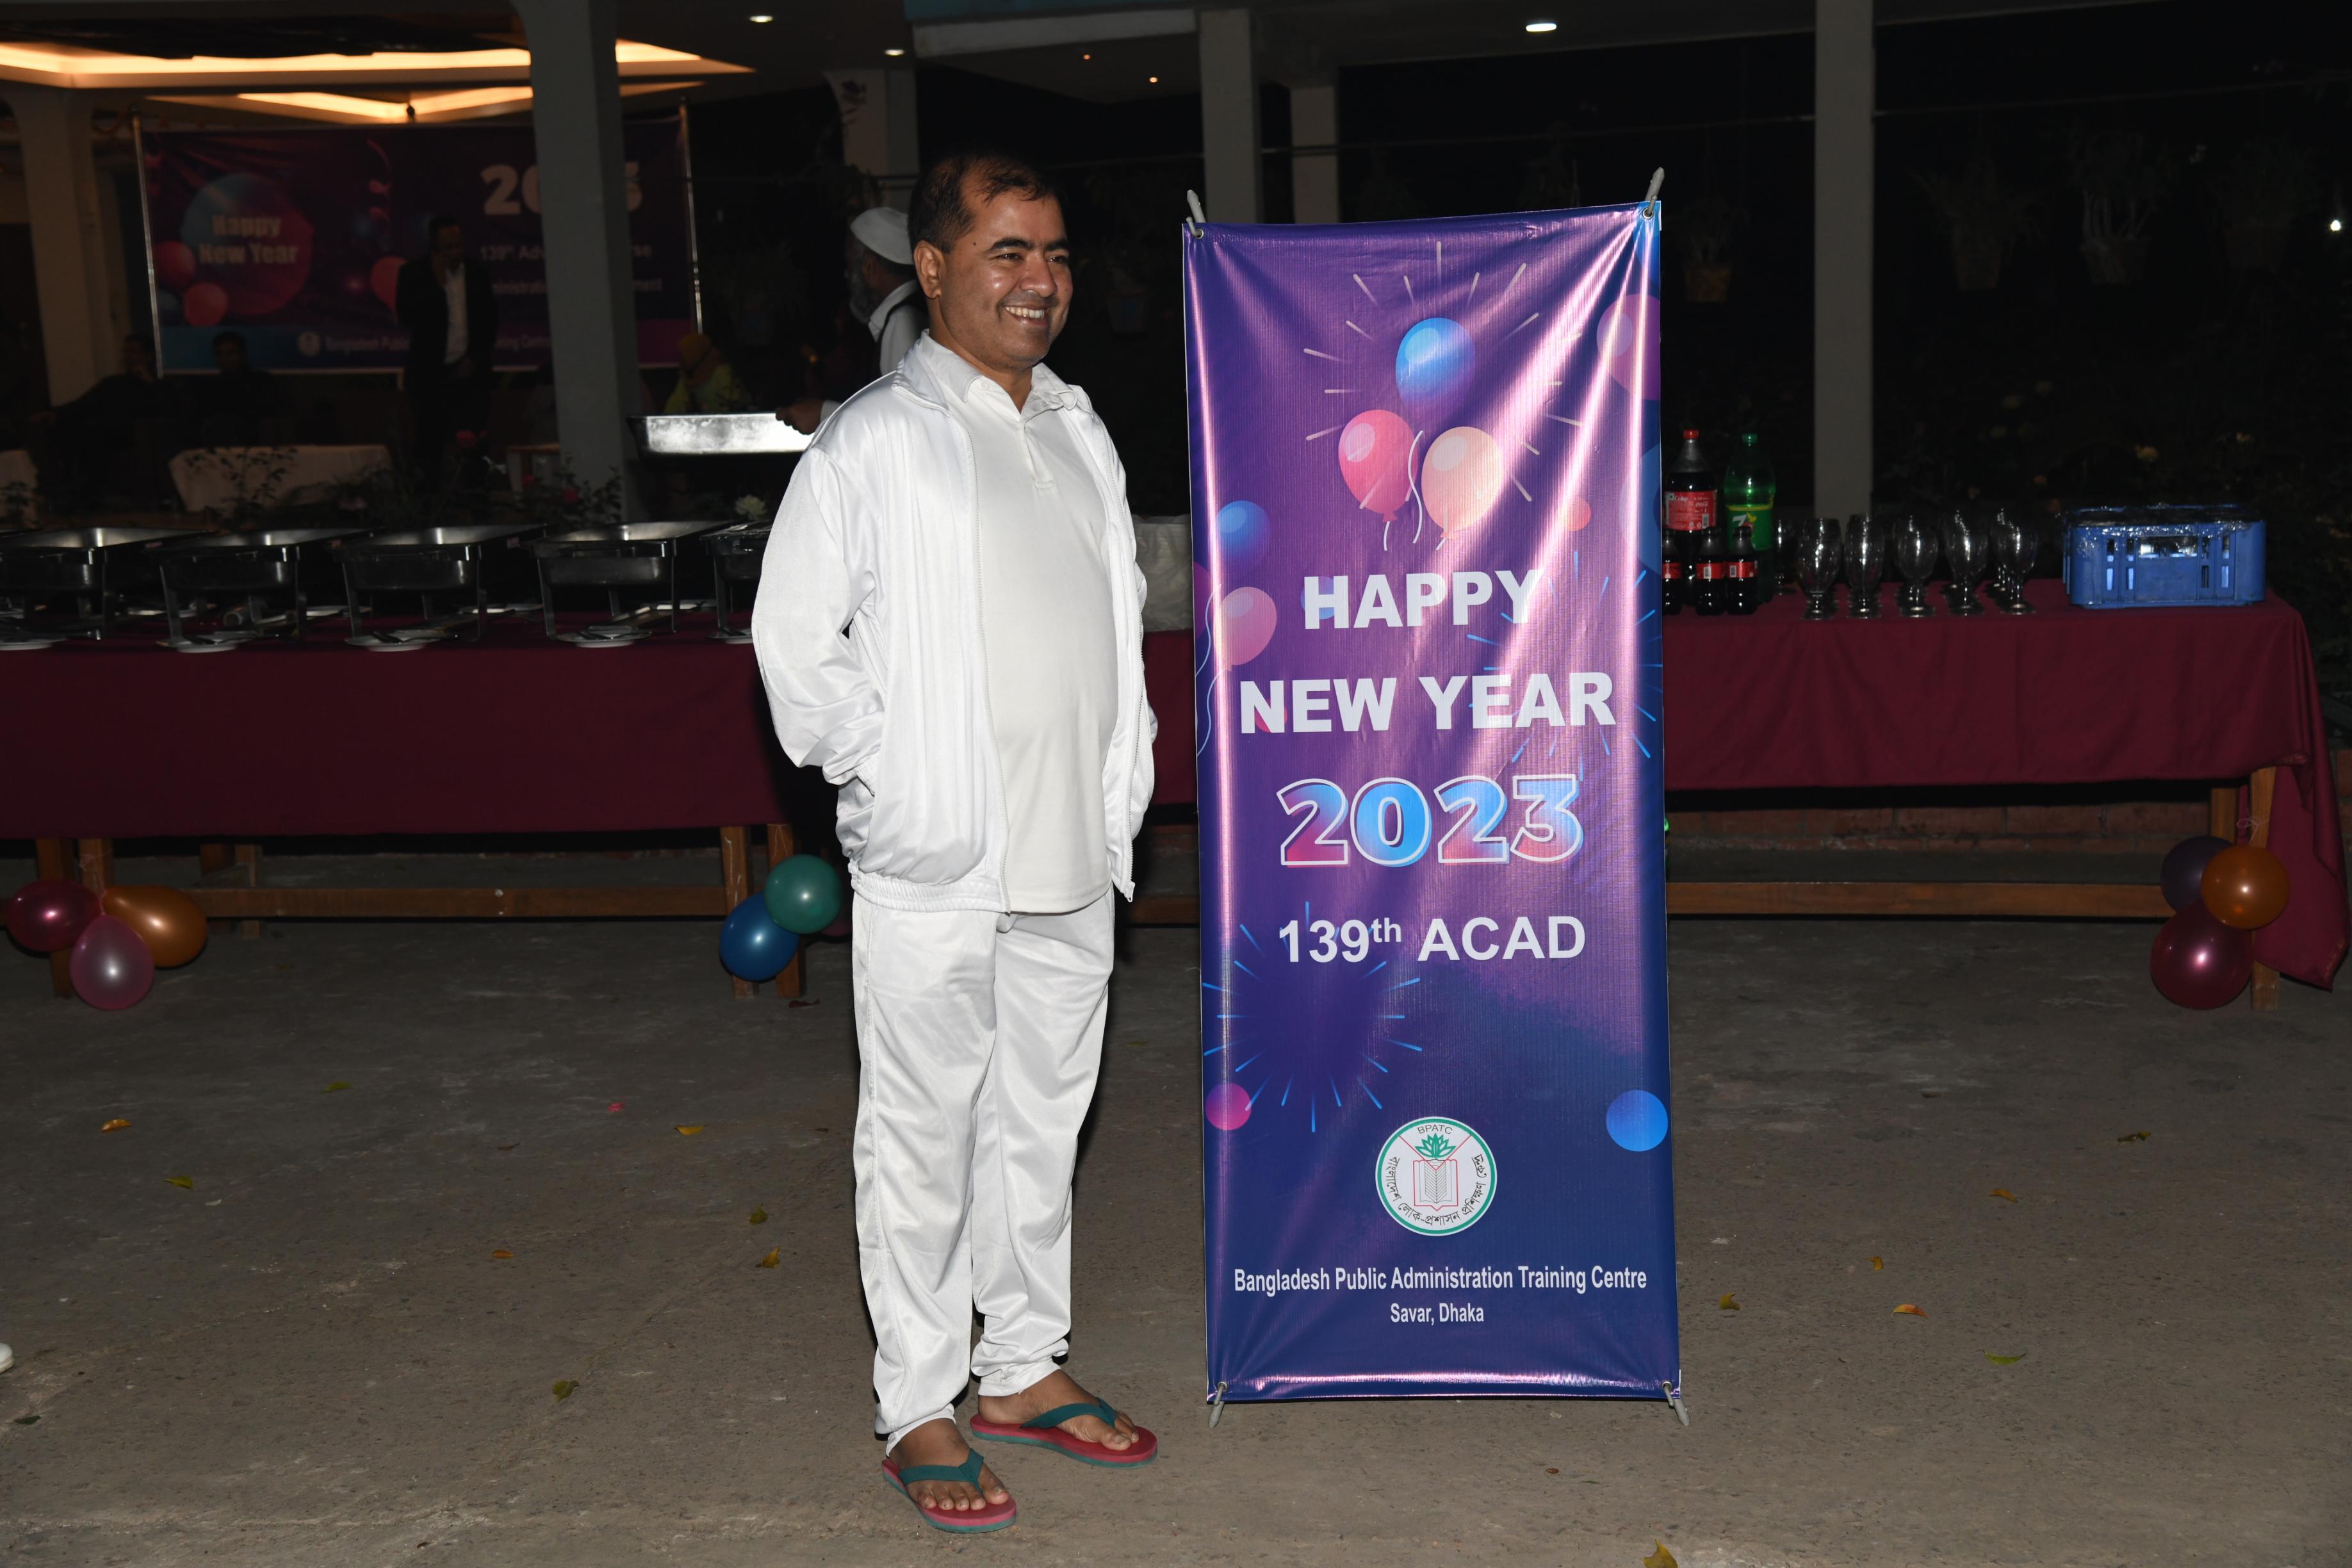 139th ACAD Happy New Year 2023 celebration